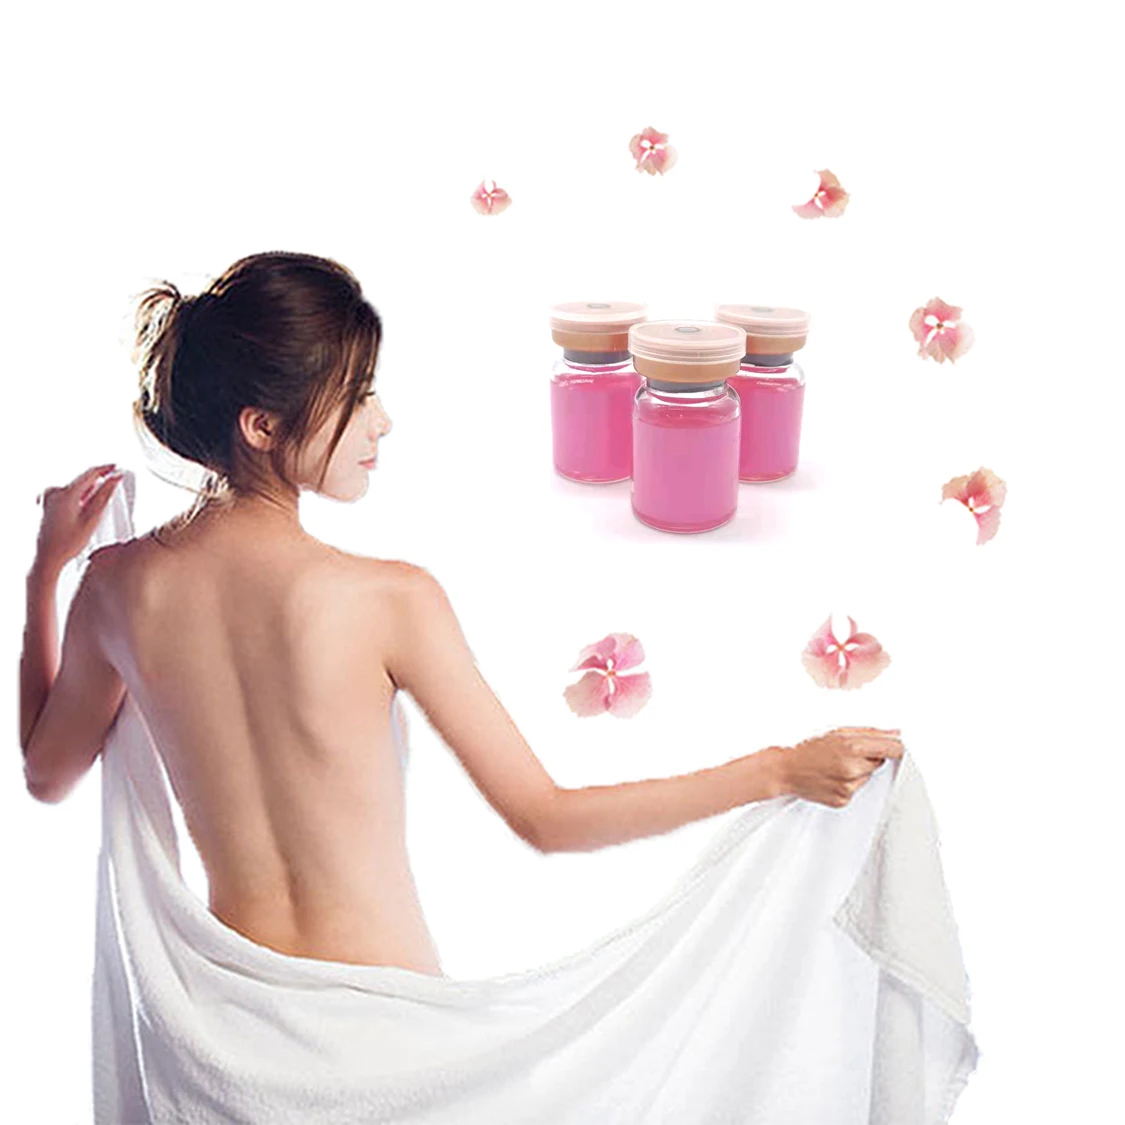 

applicator lube vaginal shrink cream 5ml firmimg lifting tightening intimate care feminine hygiene gel, Pink